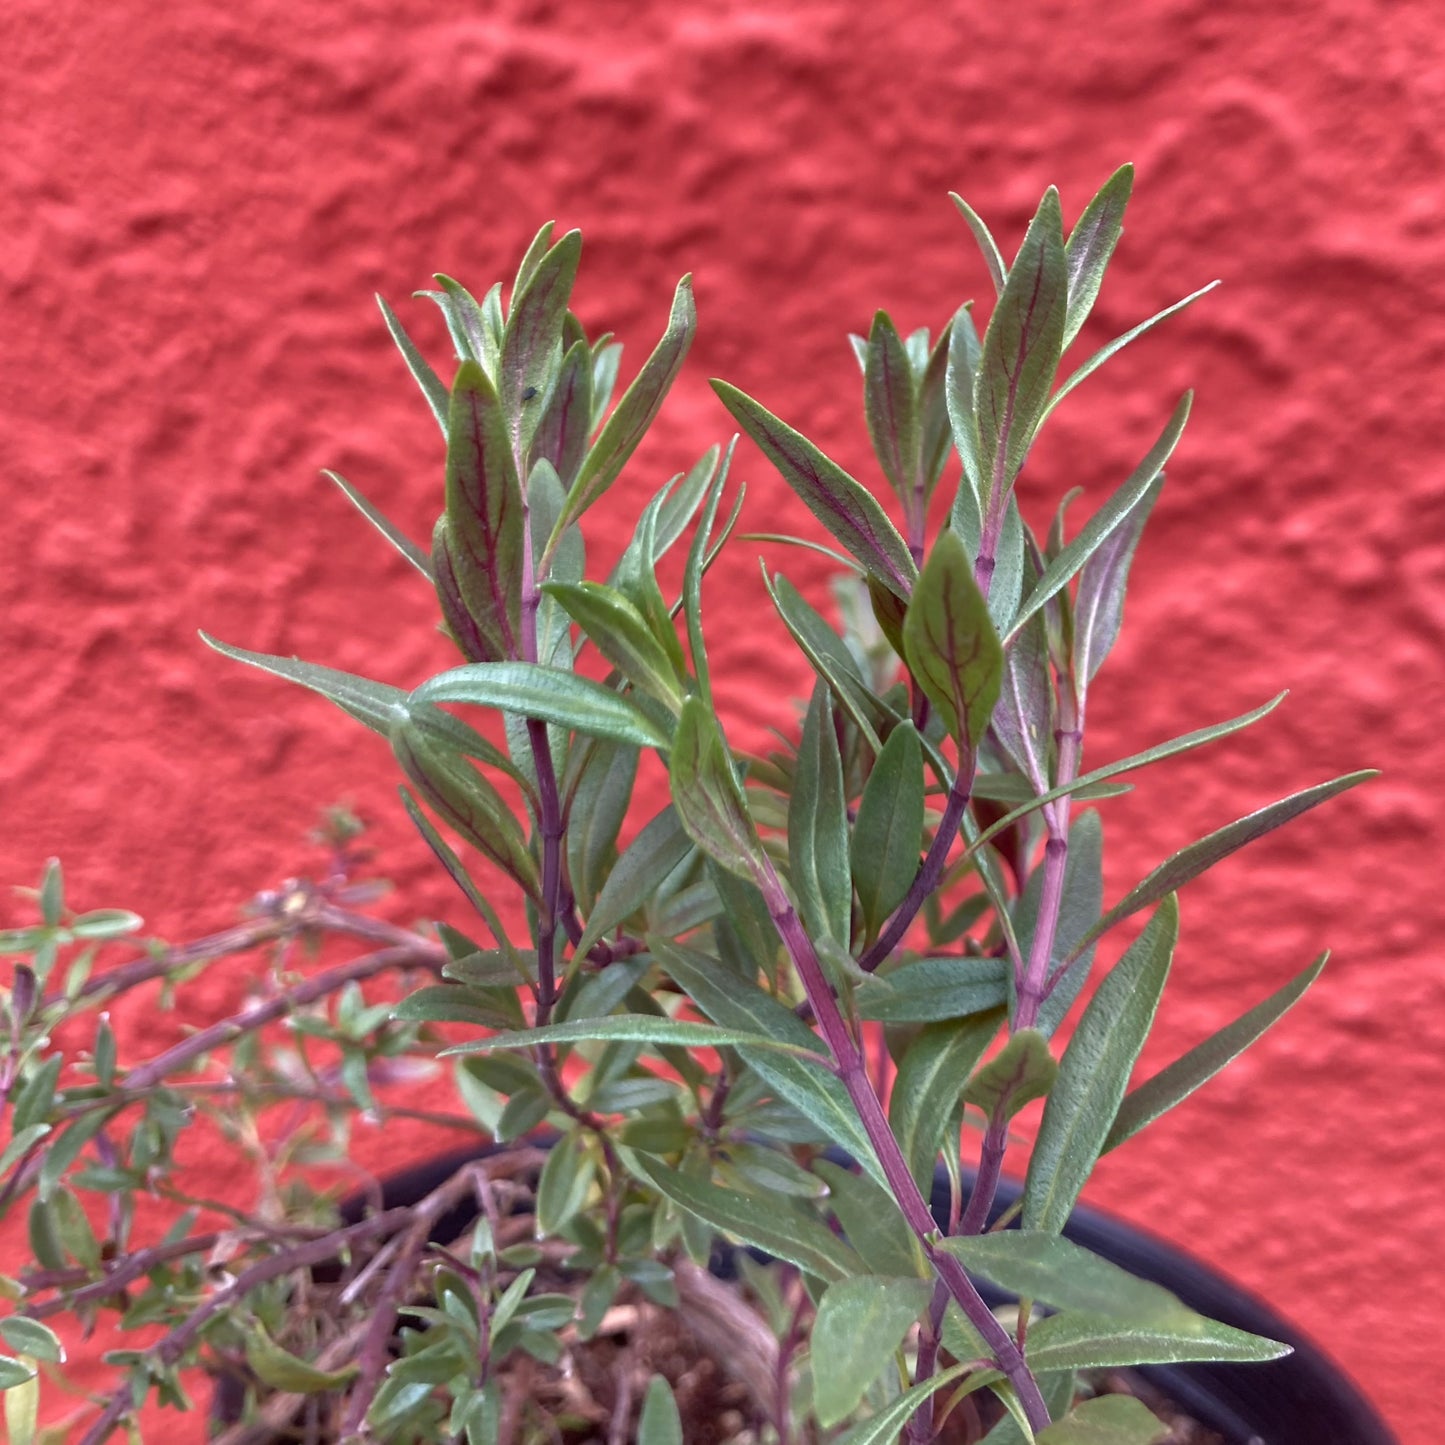 Monardella linoides ssp. viminea - Willowy Mint